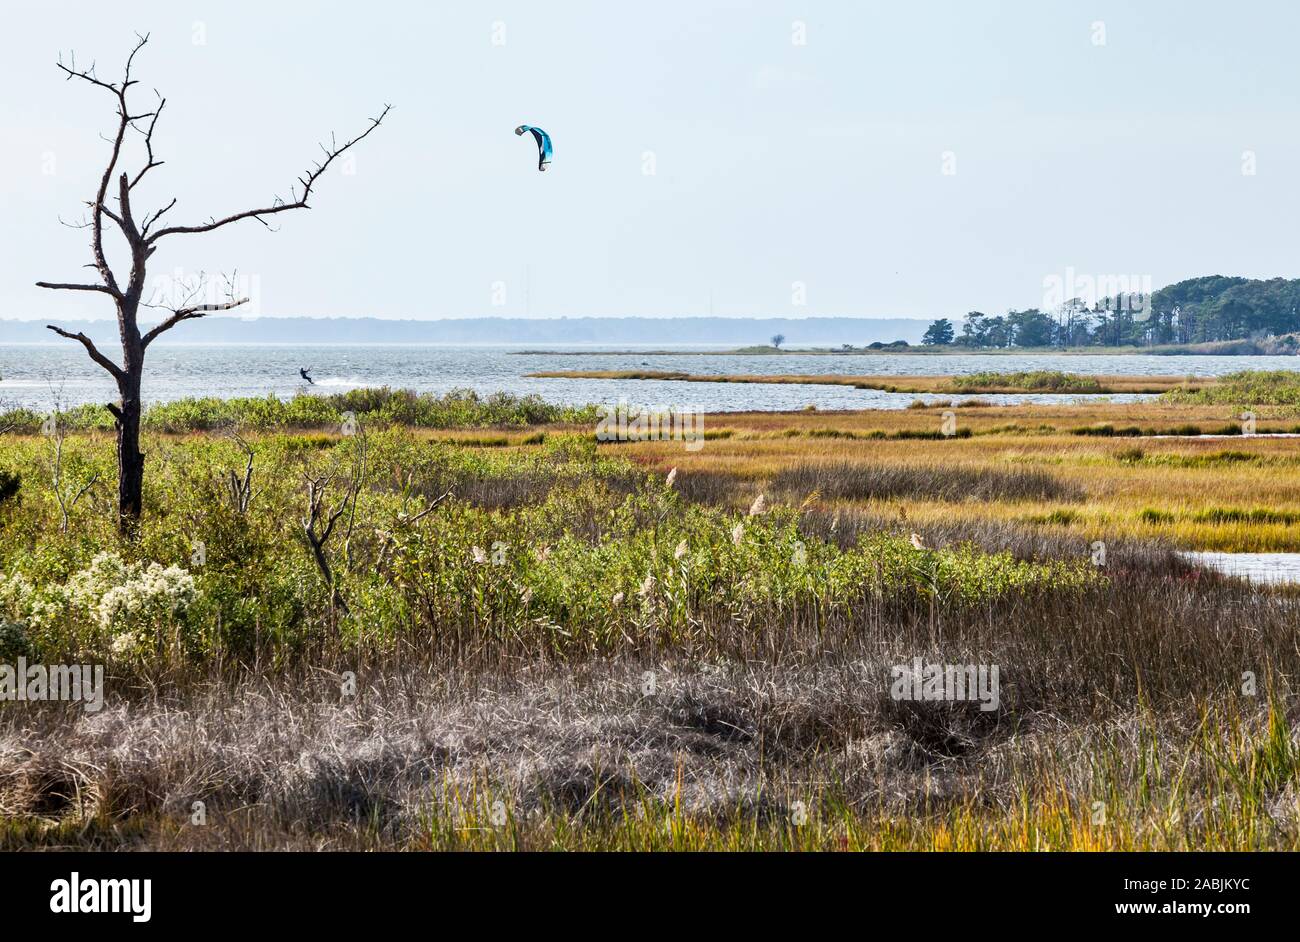 Kite boarding in Sinepuxent bay off Assateague Island National Seashore / Island, Maryland, USA Stock Photo